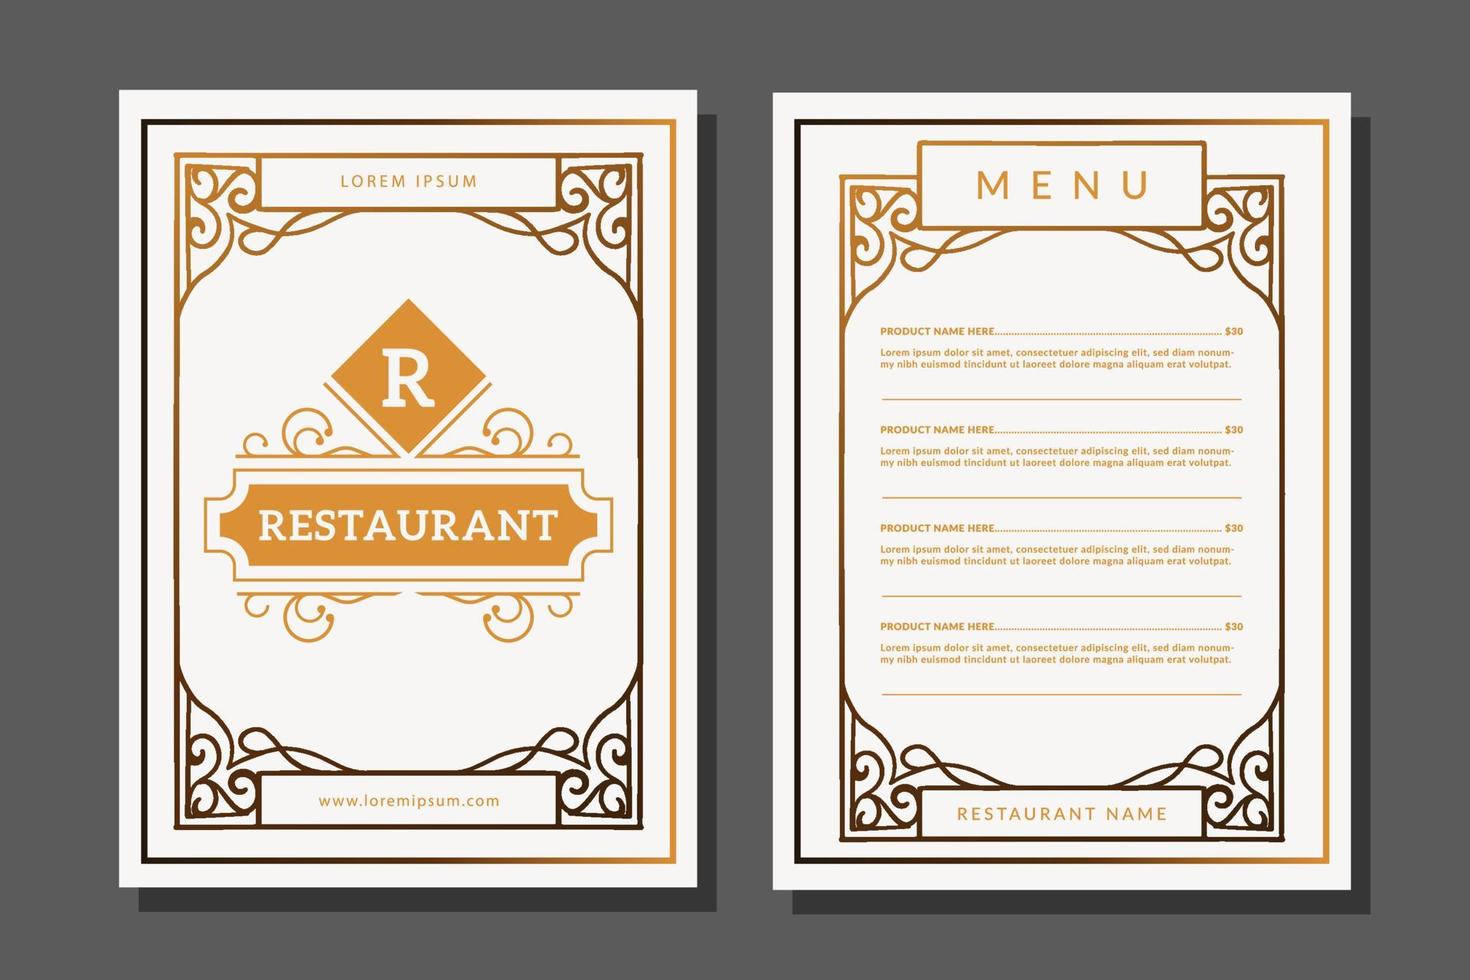 logo restaurant and restaurant menu design template with a vintage border vector